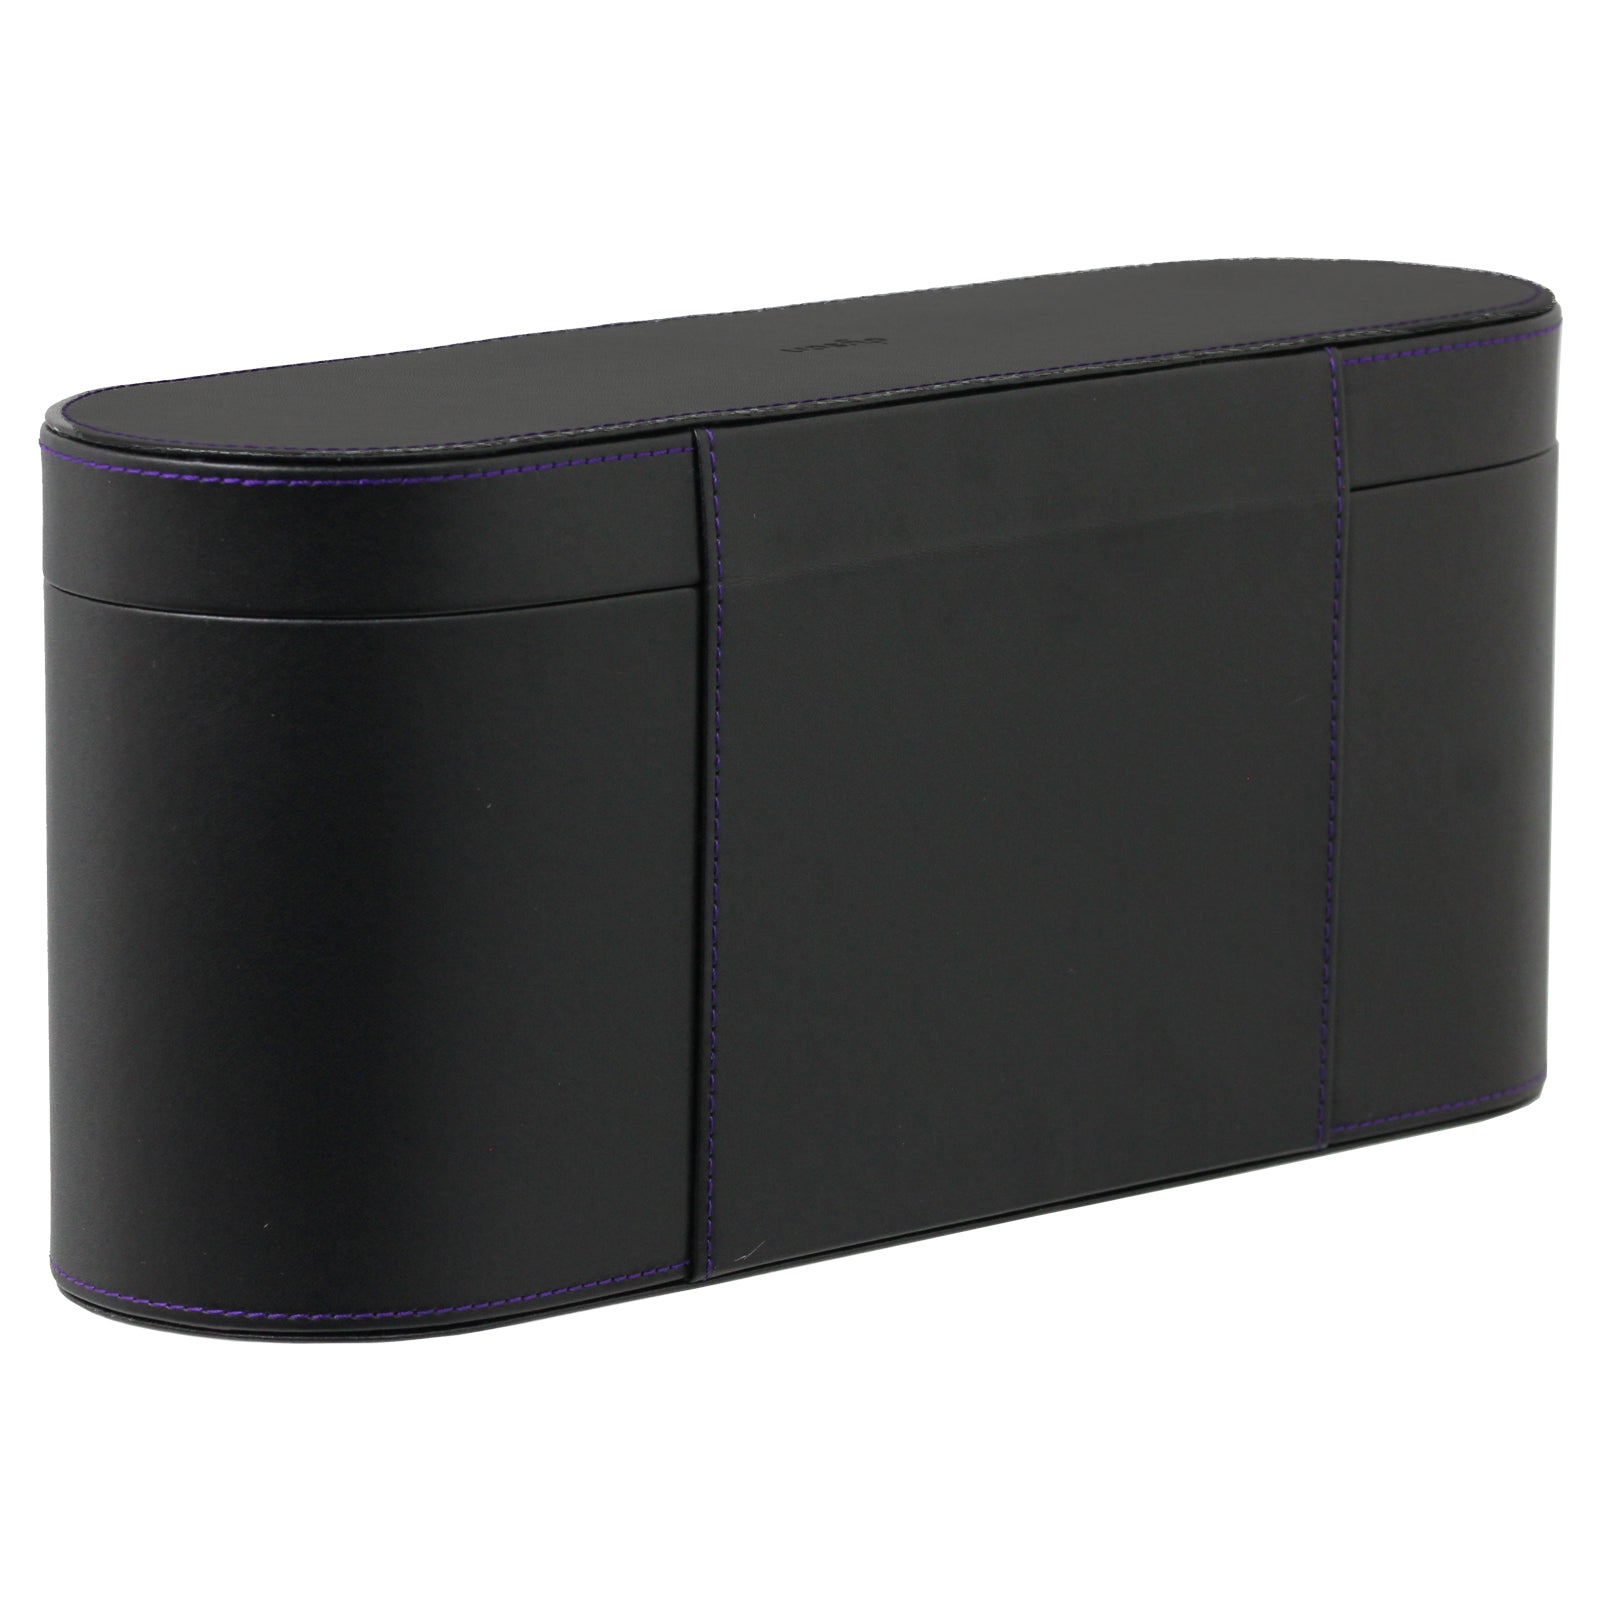 DYSON Supersonic™ Hair Dryer Box Travel Storage Presentation Case (Black)